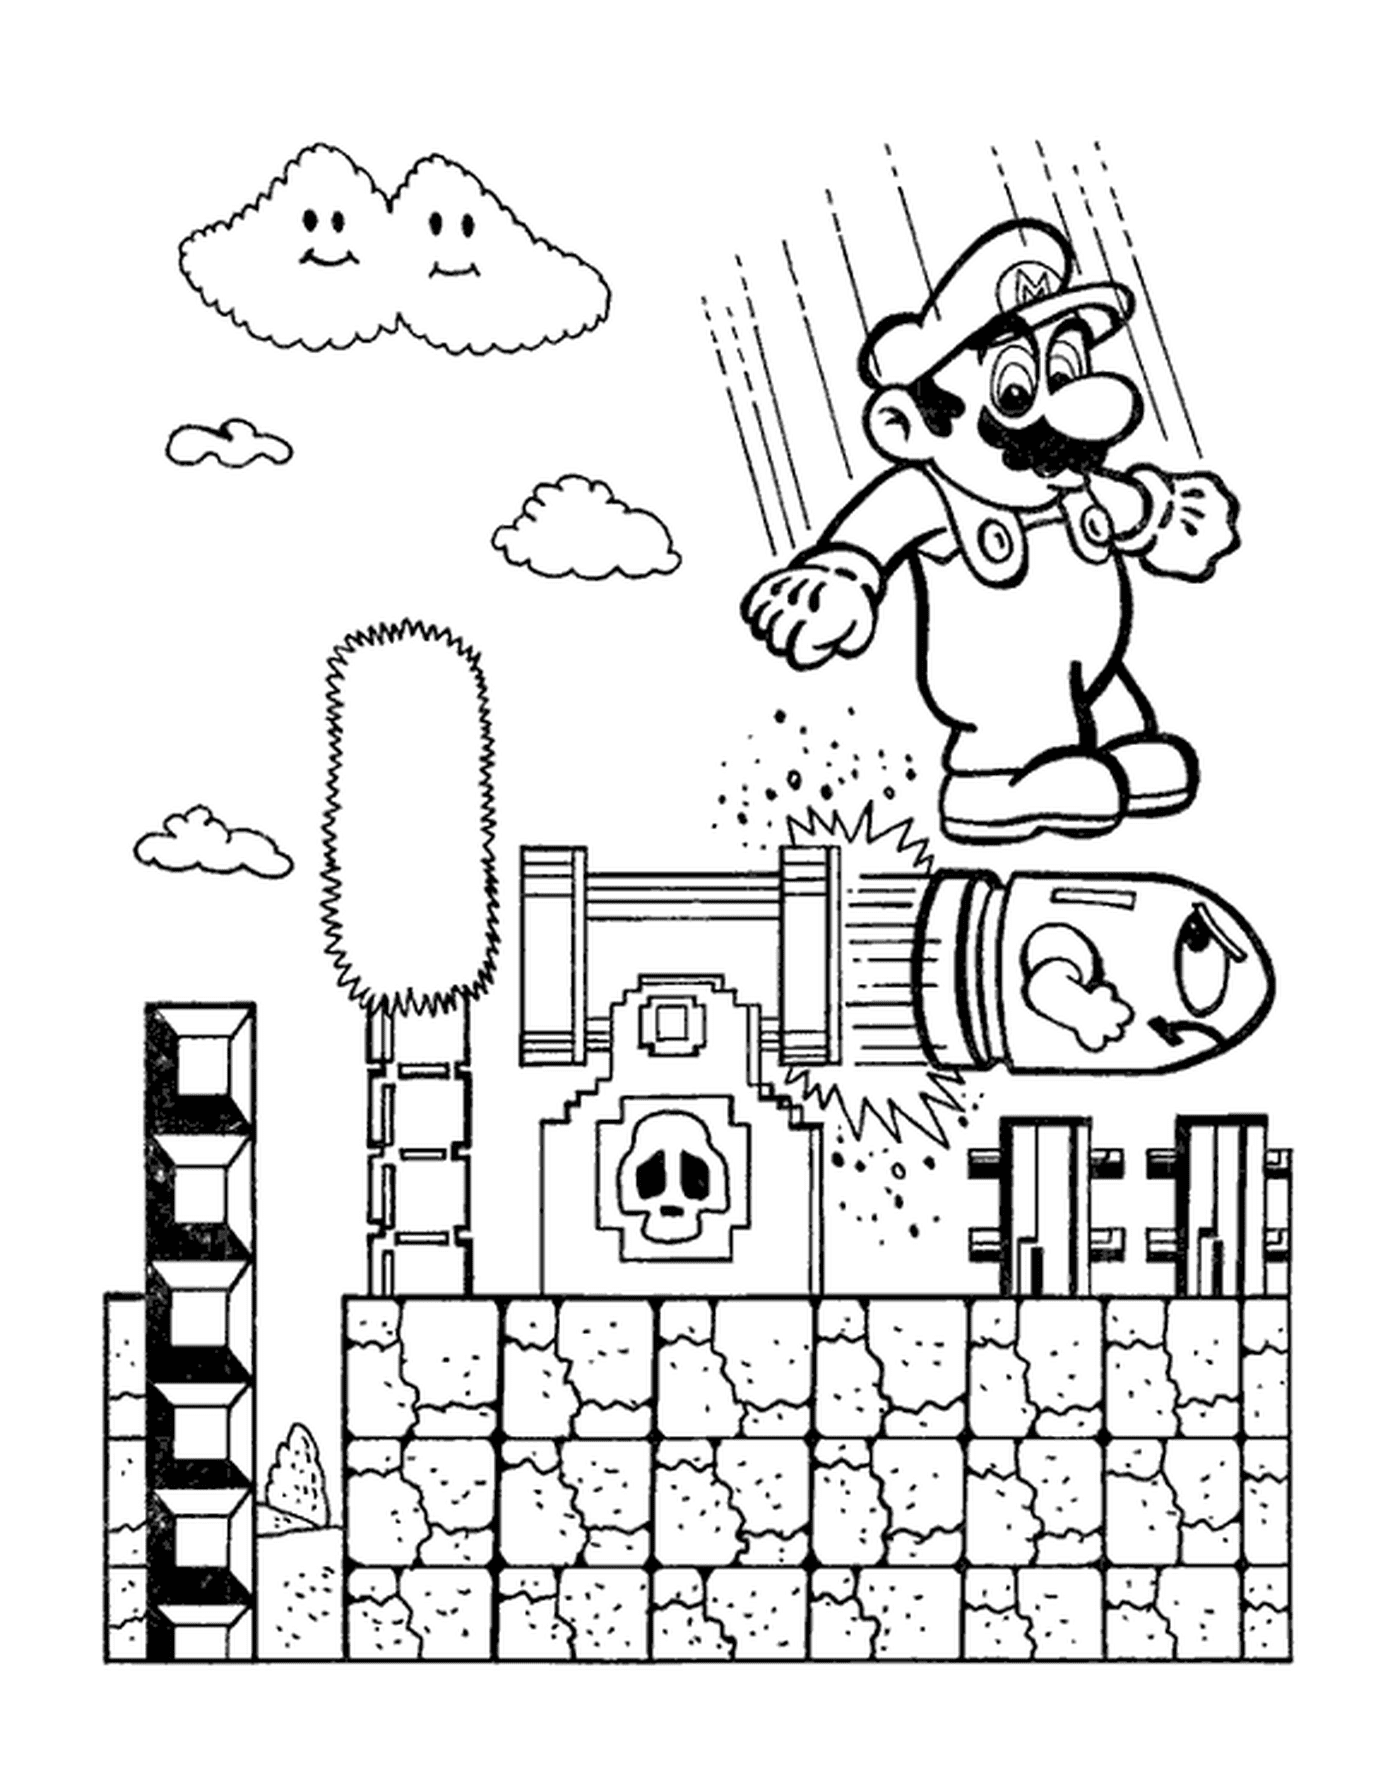  Марио прыгает на опасную бомбу 